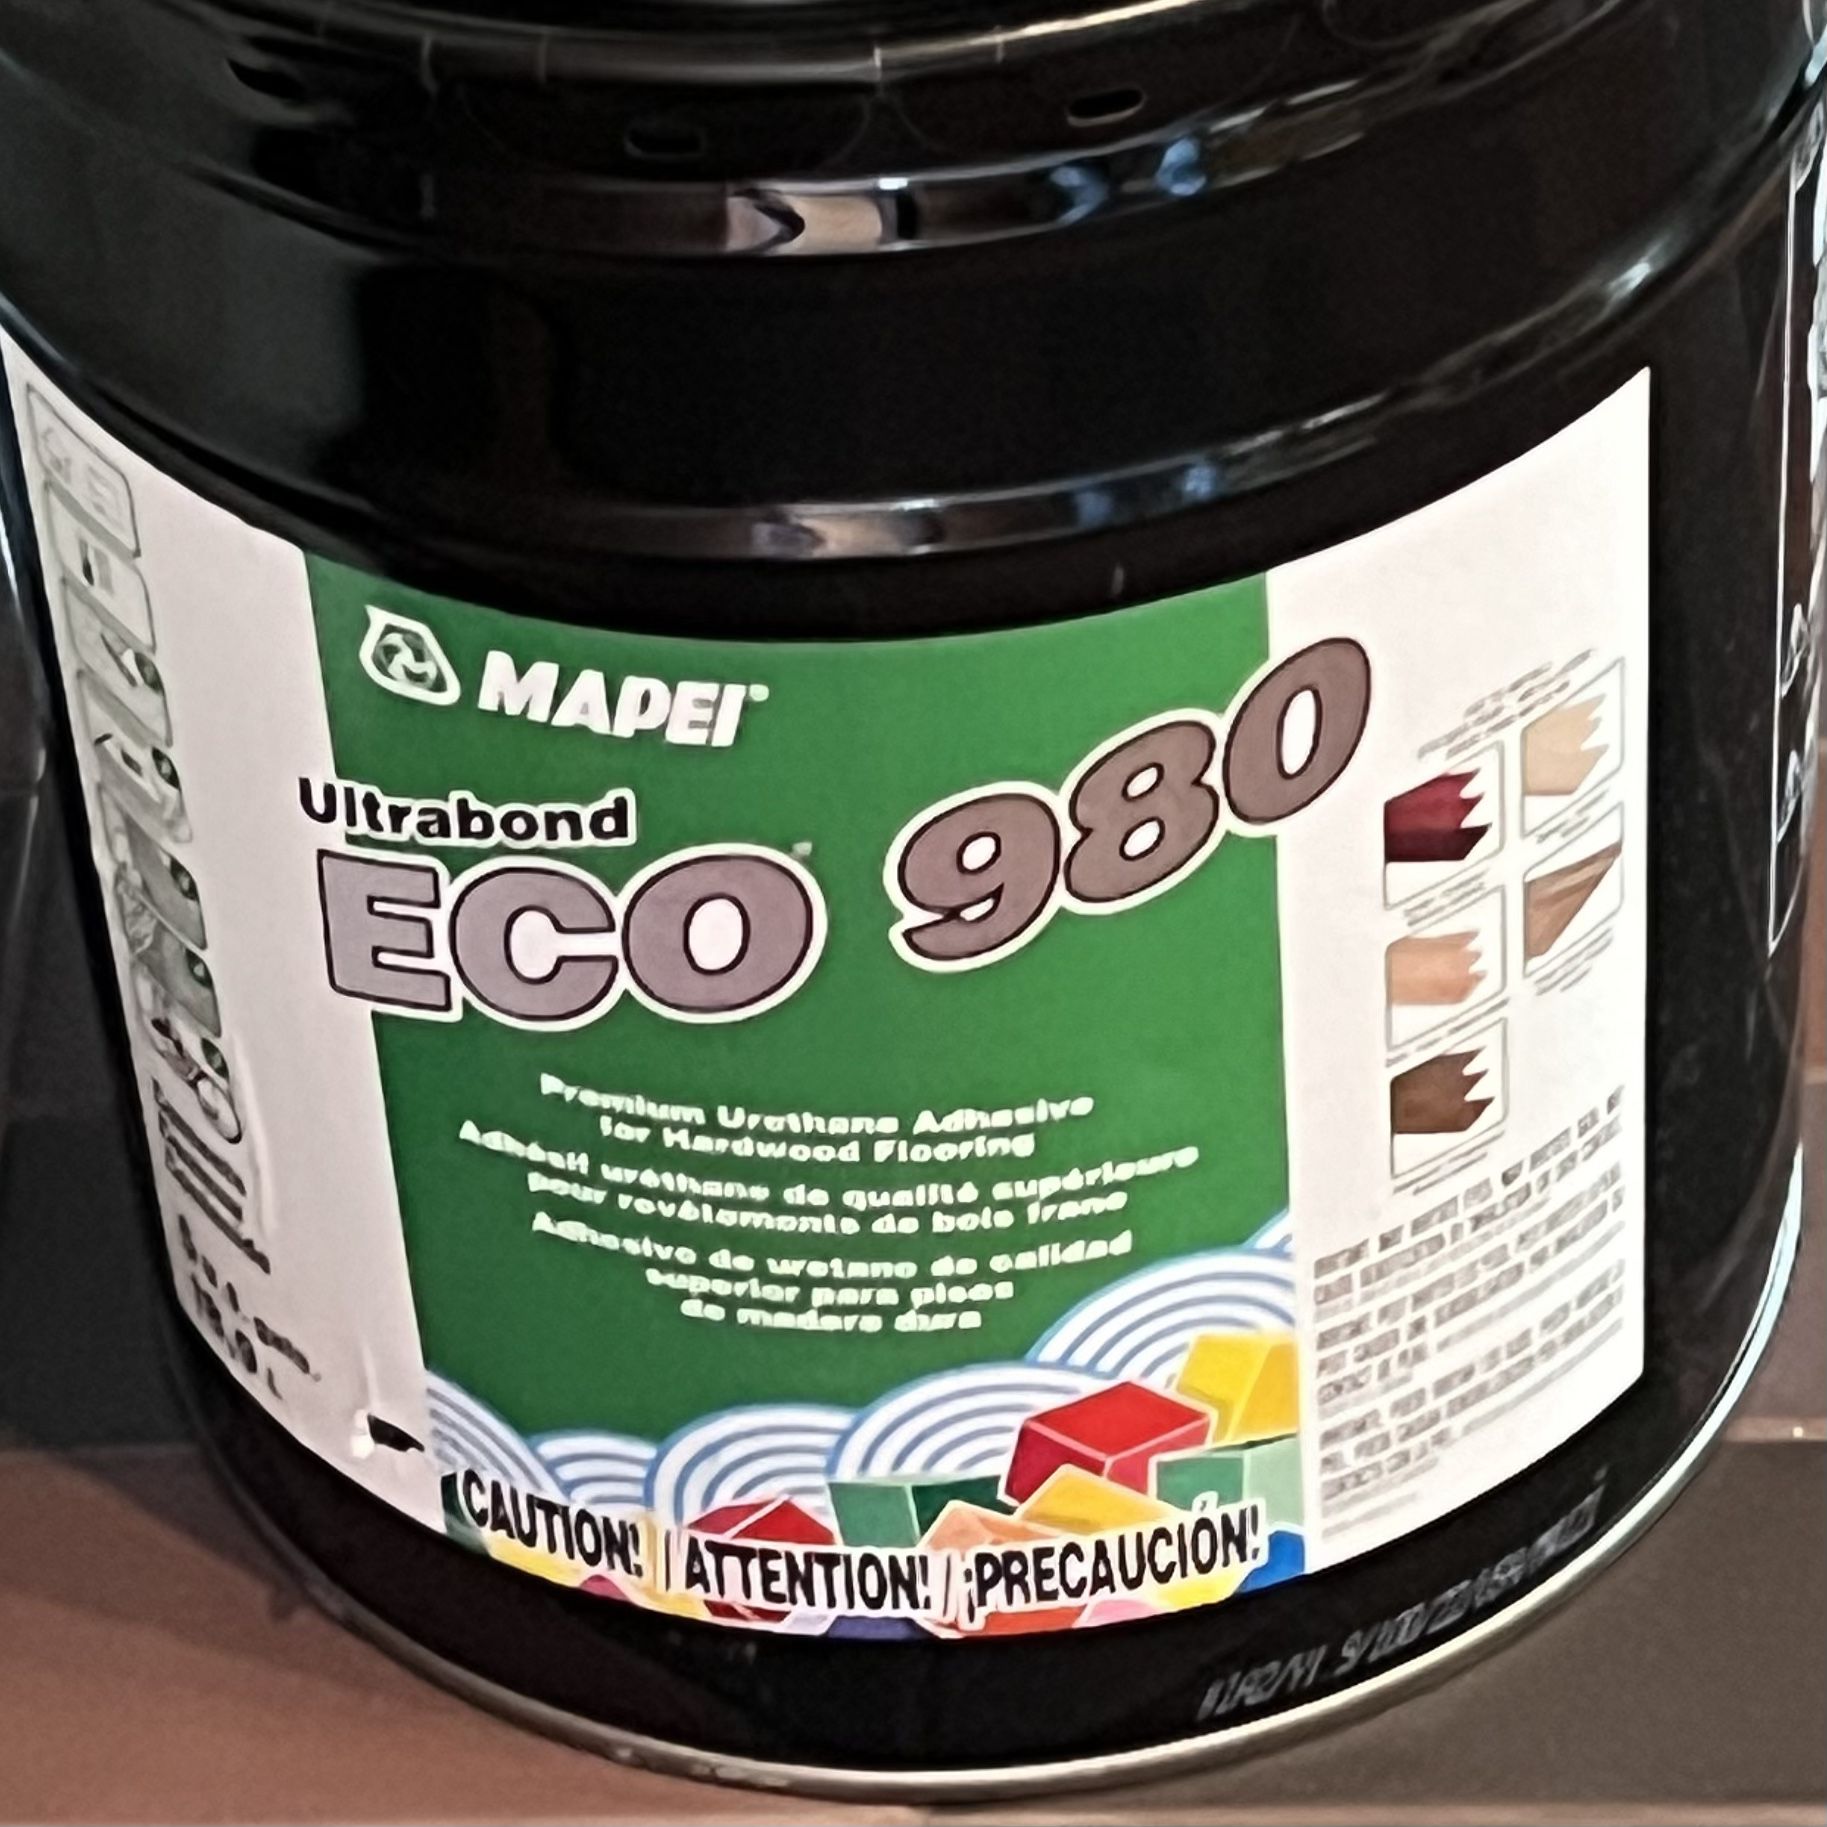 Eco 980 premium adhesive for hardwood floors.